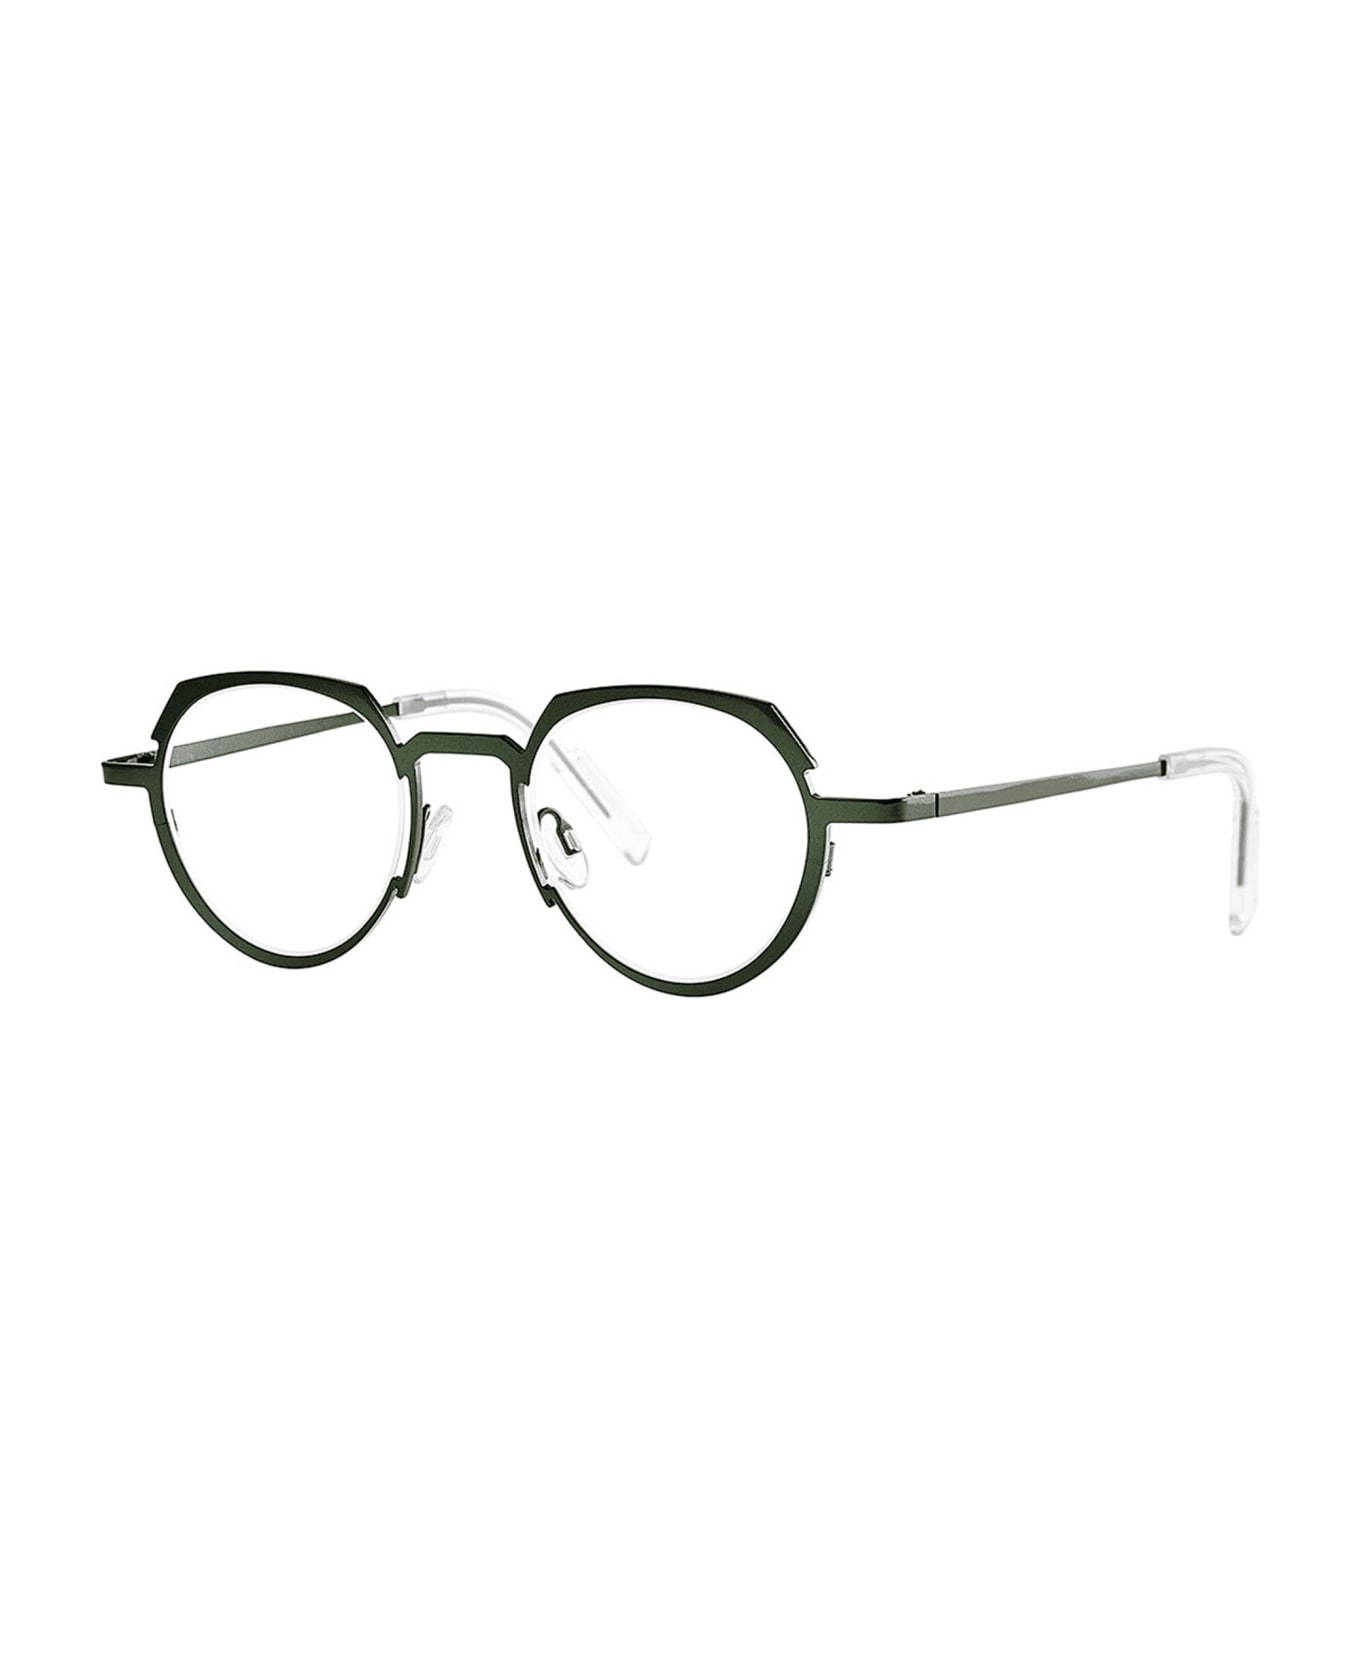 Theo Eyewear Receiver - 508 Sanremo Green Rx Glasses - green アイウェア